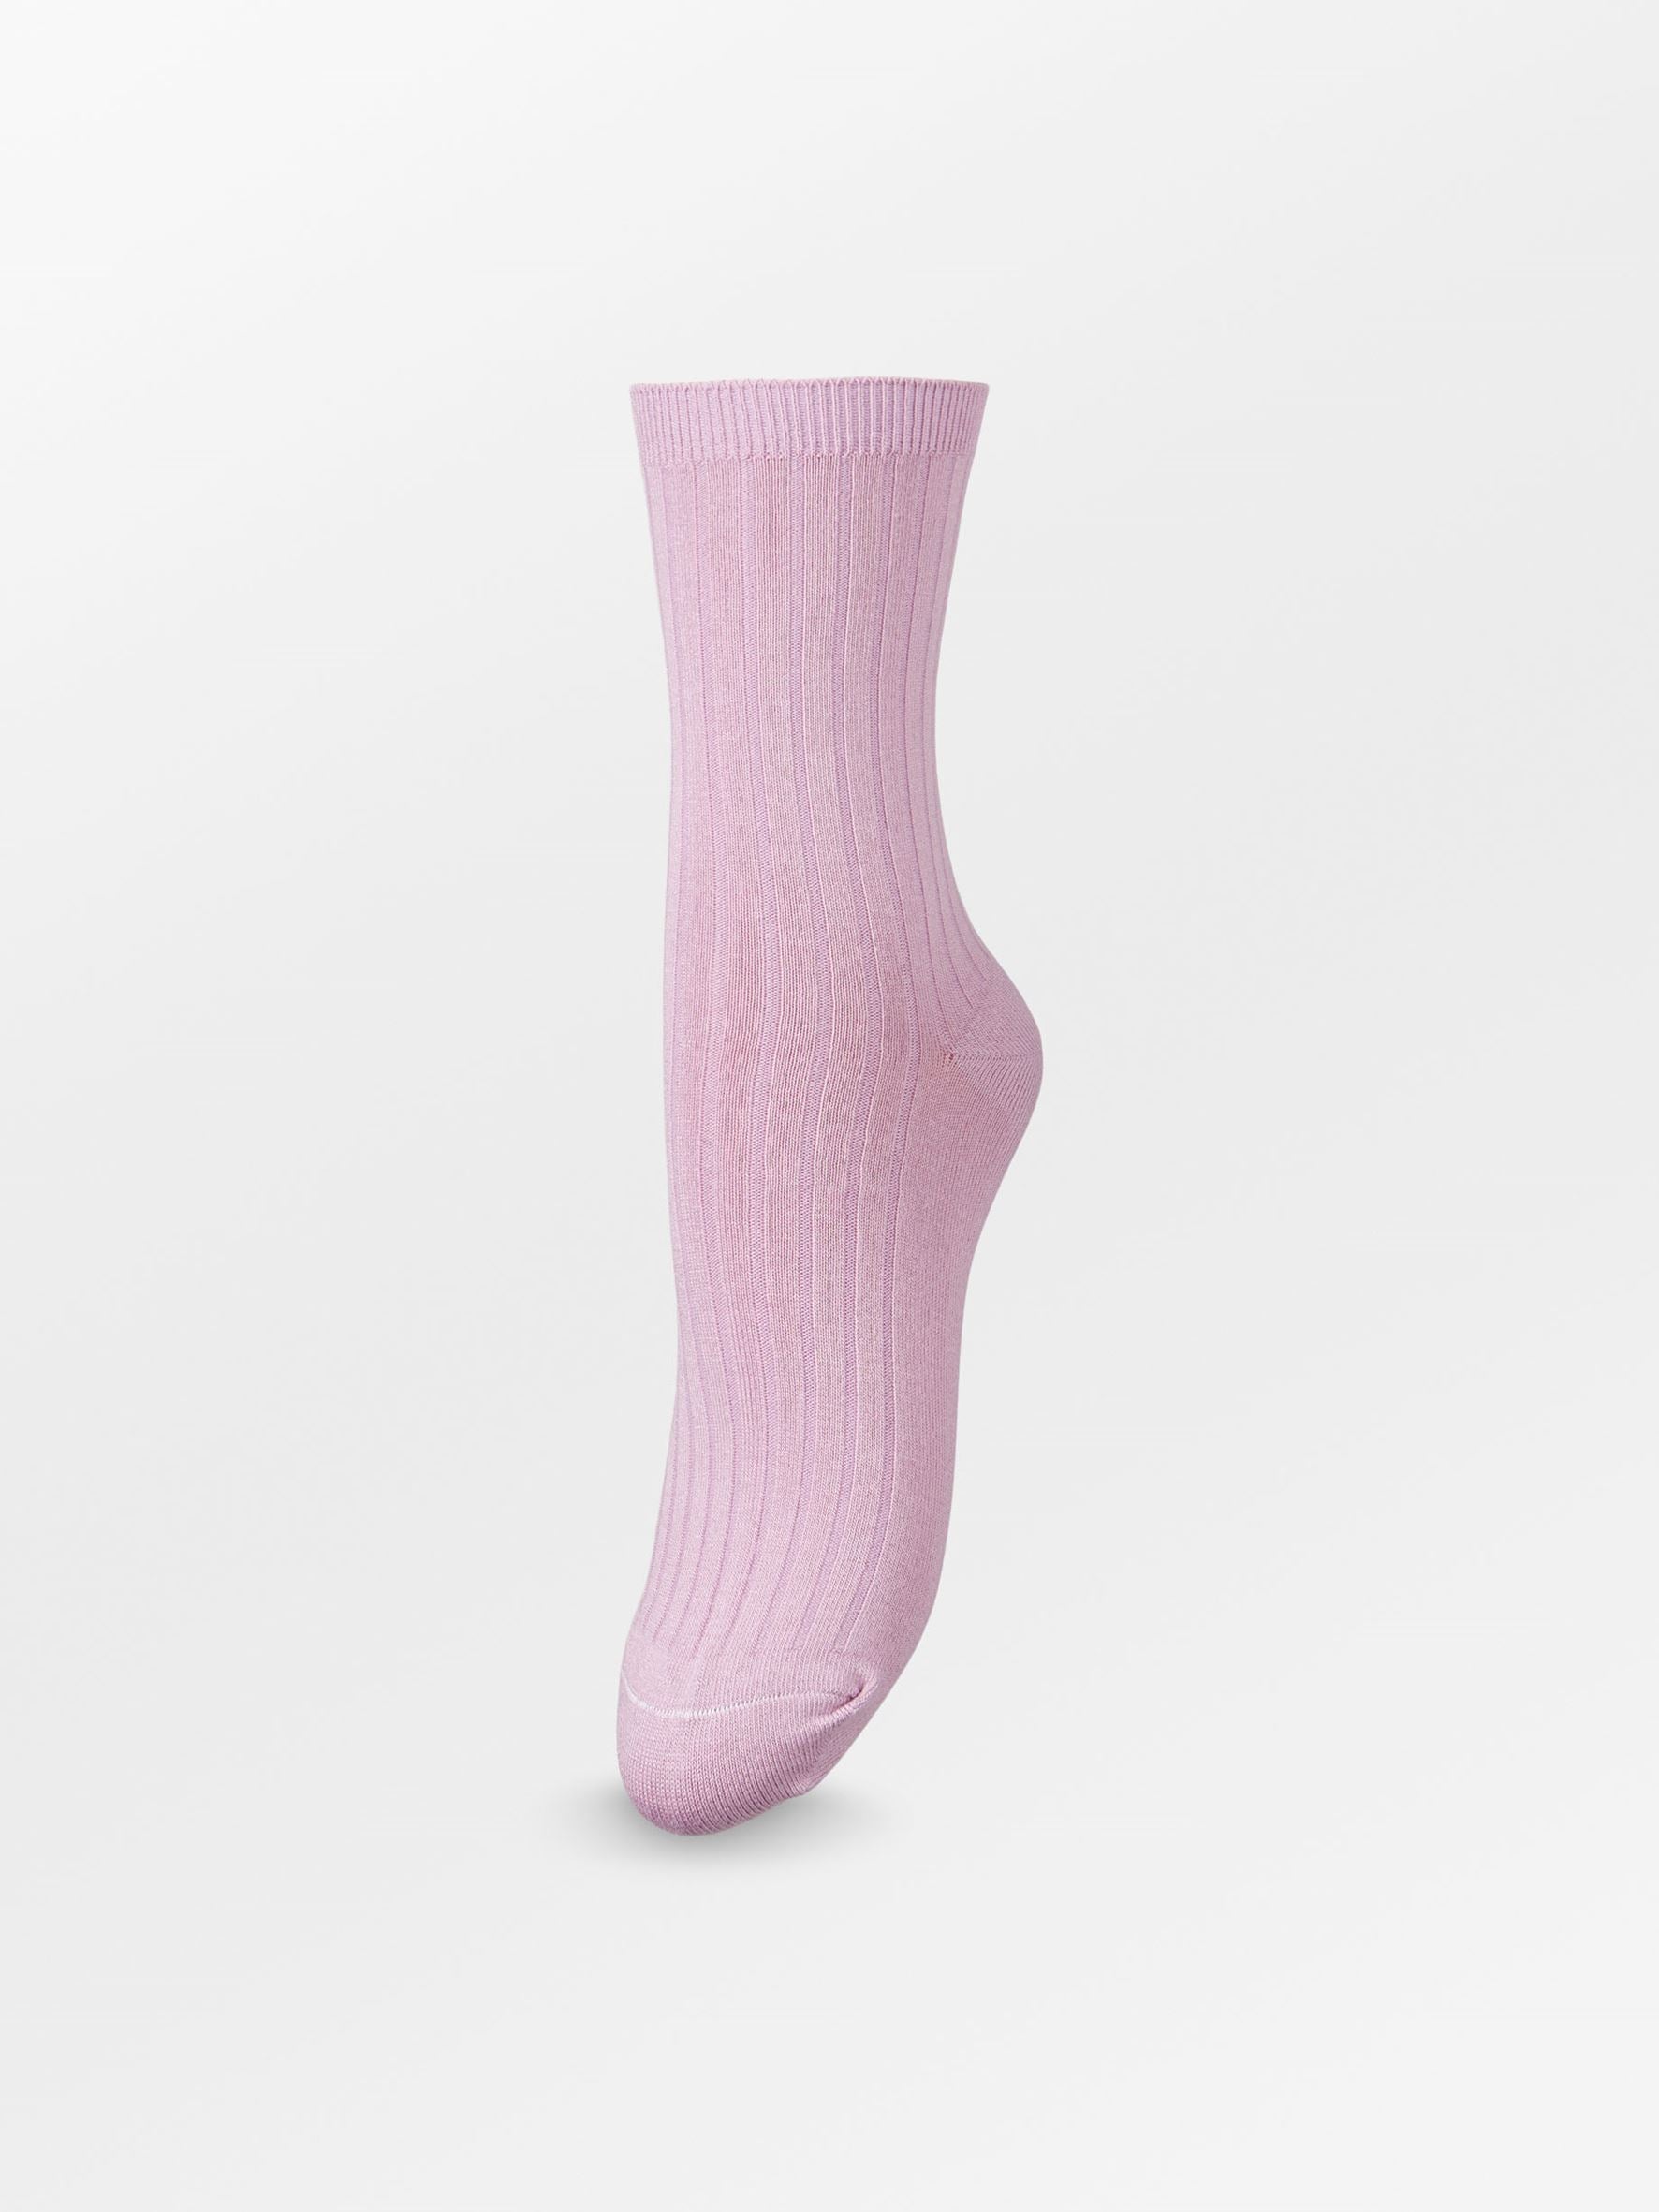 Becksöndergaard, Elva Solid Sock - Mauve Mist, socks, archive, archive, sale, sale, socks